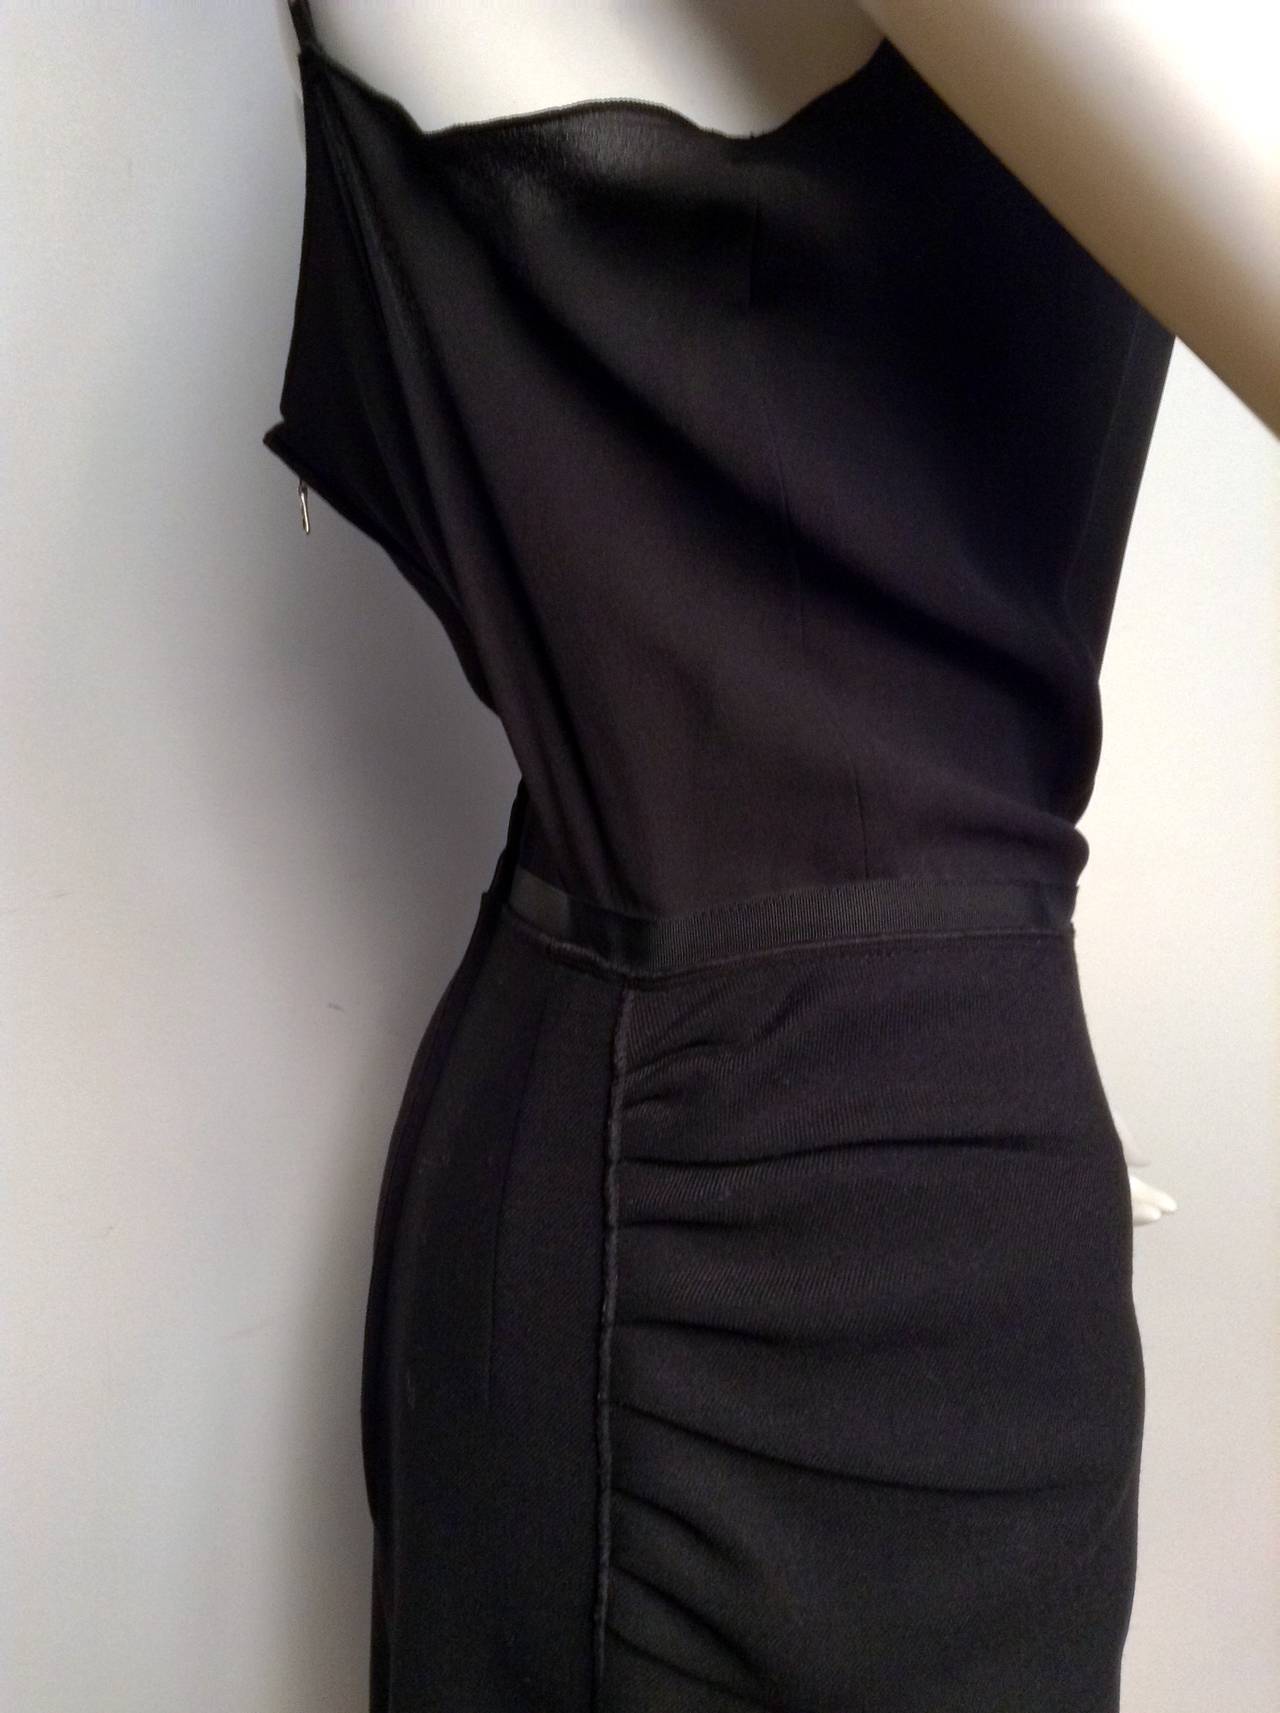 Nina Ricci Black Cocktail Dress Size 42/10 2012 For Sale 2